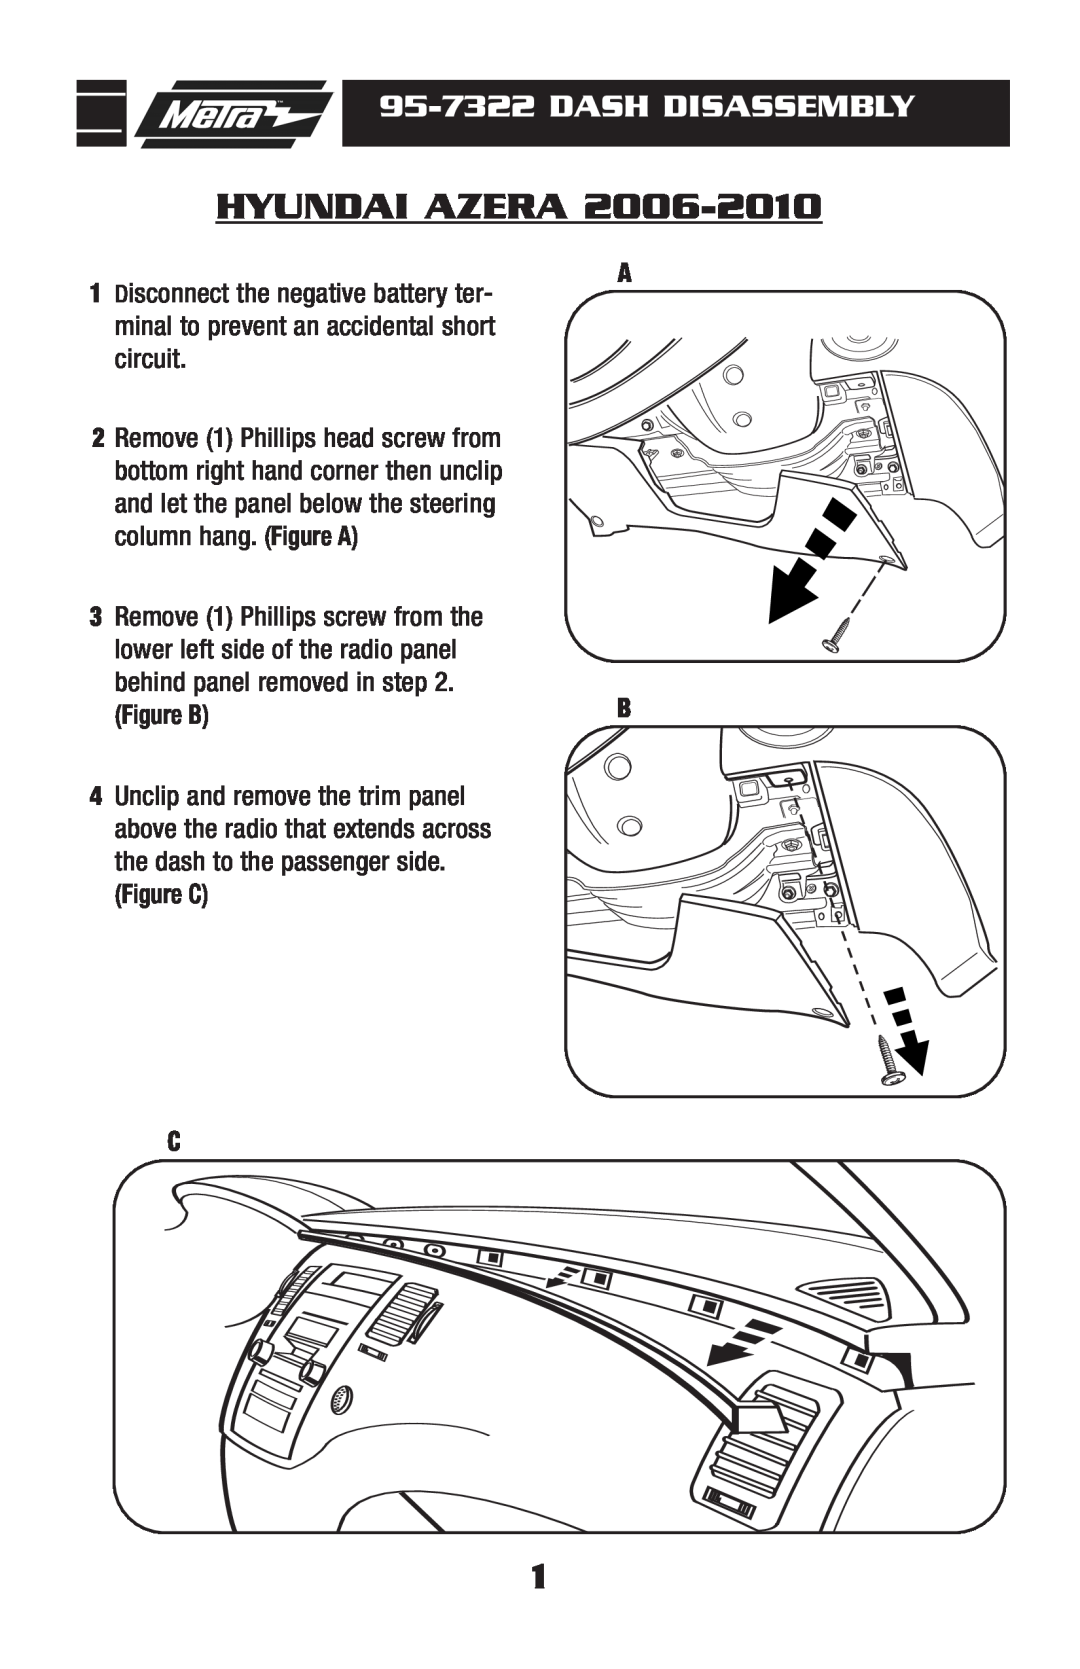 Metra Electronics installation instructions Hyundai Azera, 95-7322DASH DISASSEMBLY, Figure B, Figure C 